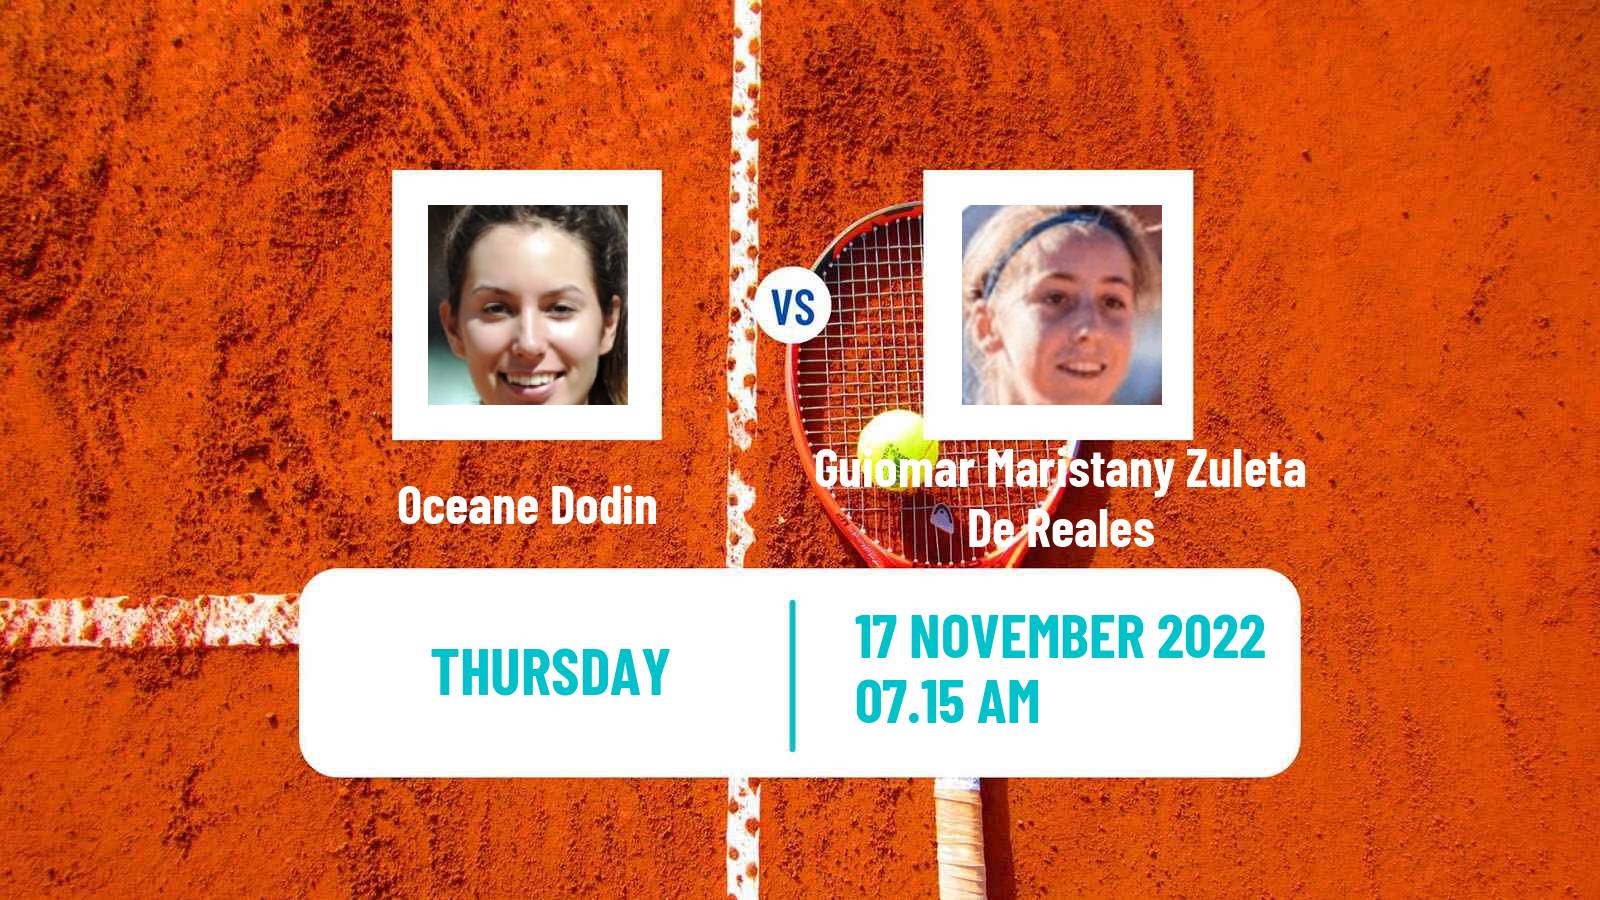 Tennis ITF Tournaments Oceane Dodin - Guiomar Maristany Zuleta De Reales